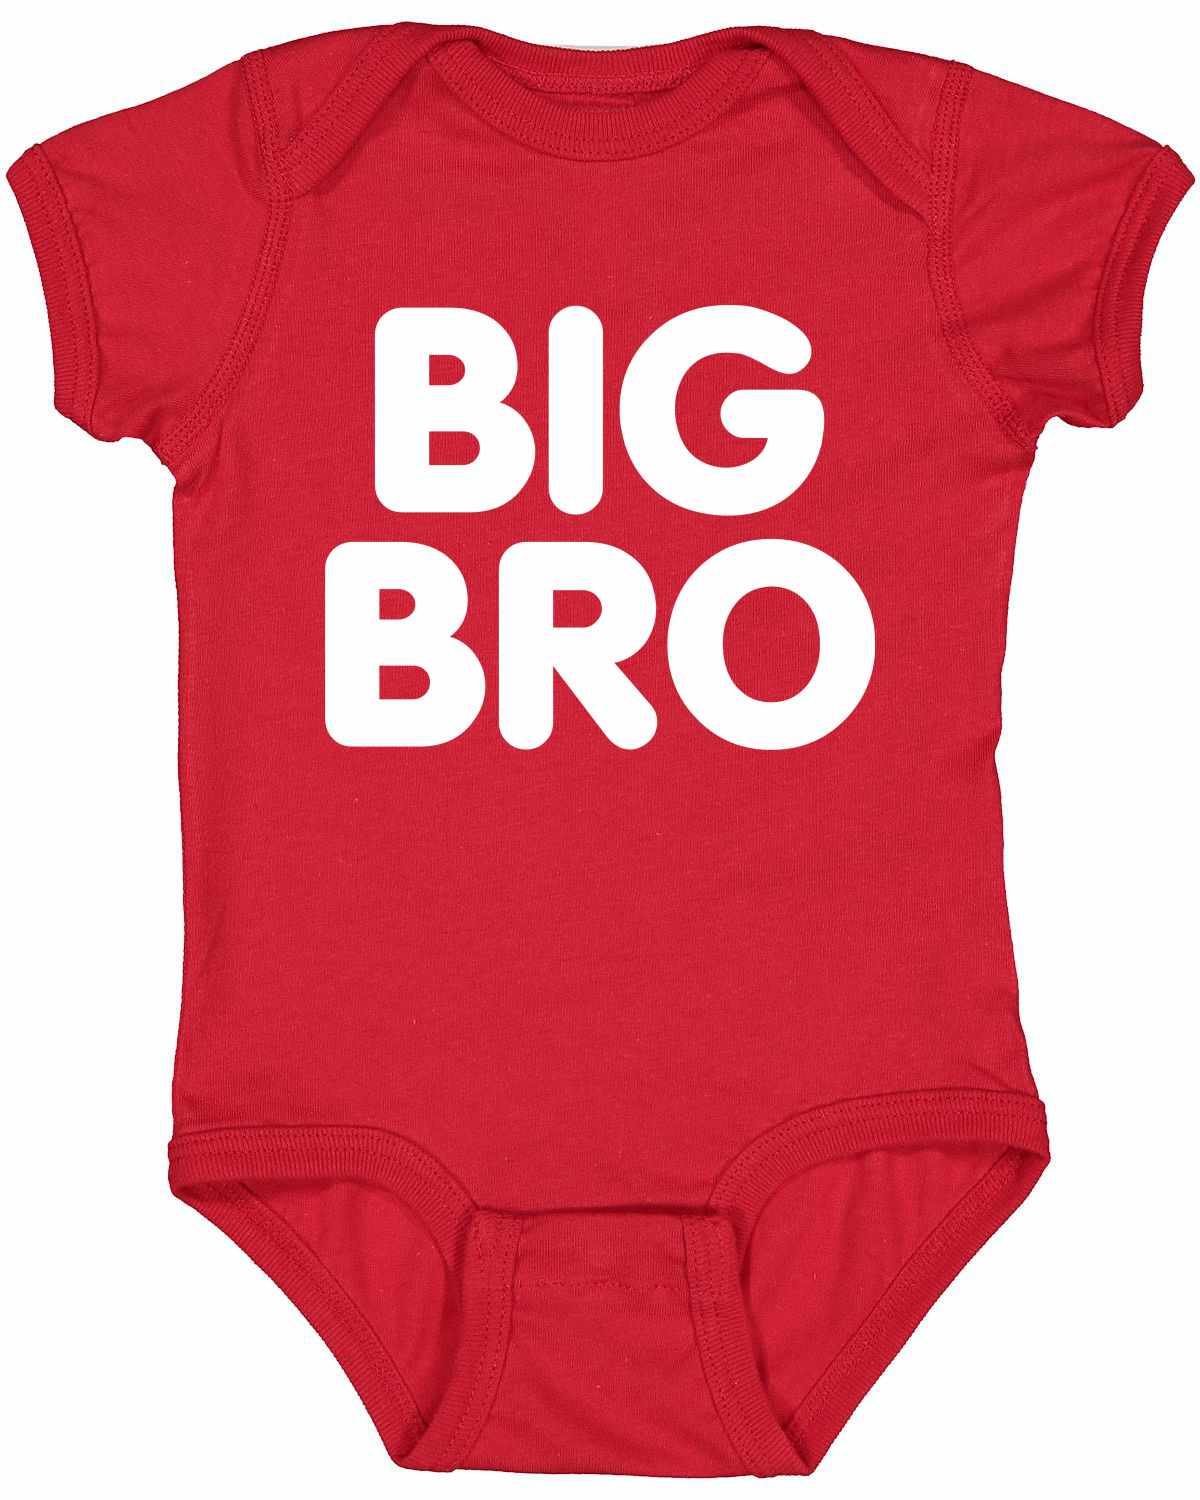 BIG BRO on Infant BodySuit (#951-10)